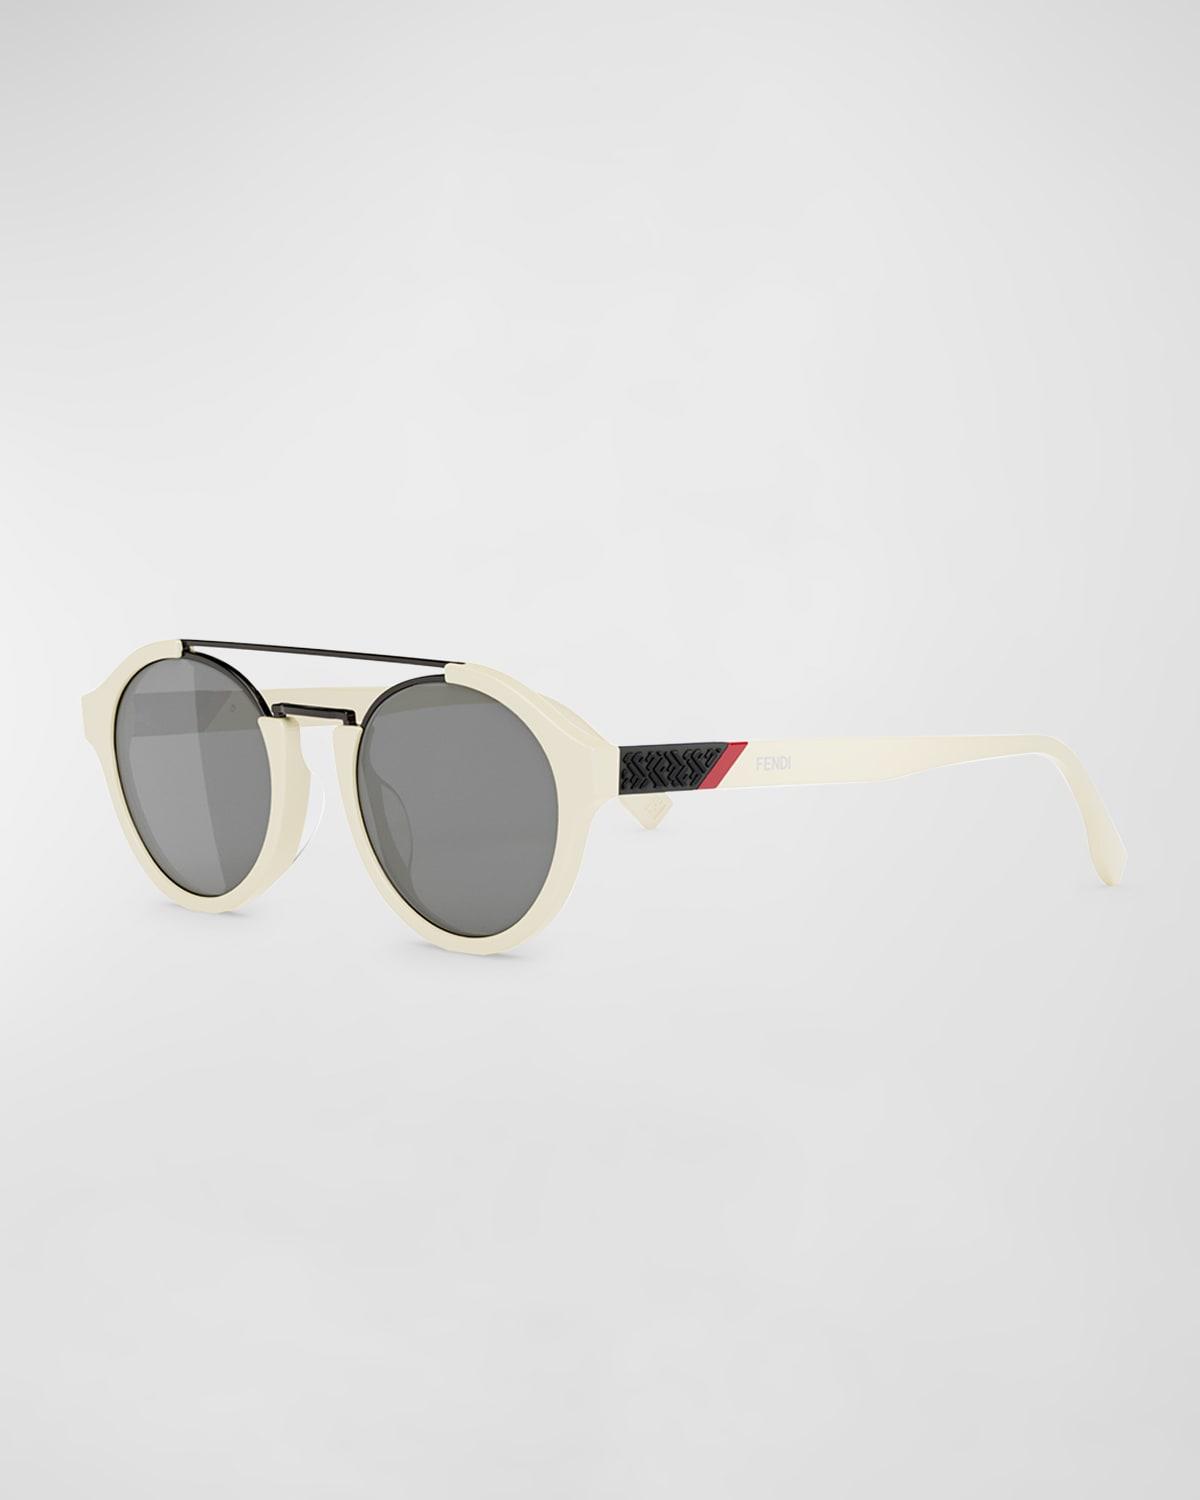 Sunglasses - Fendi Diagonal